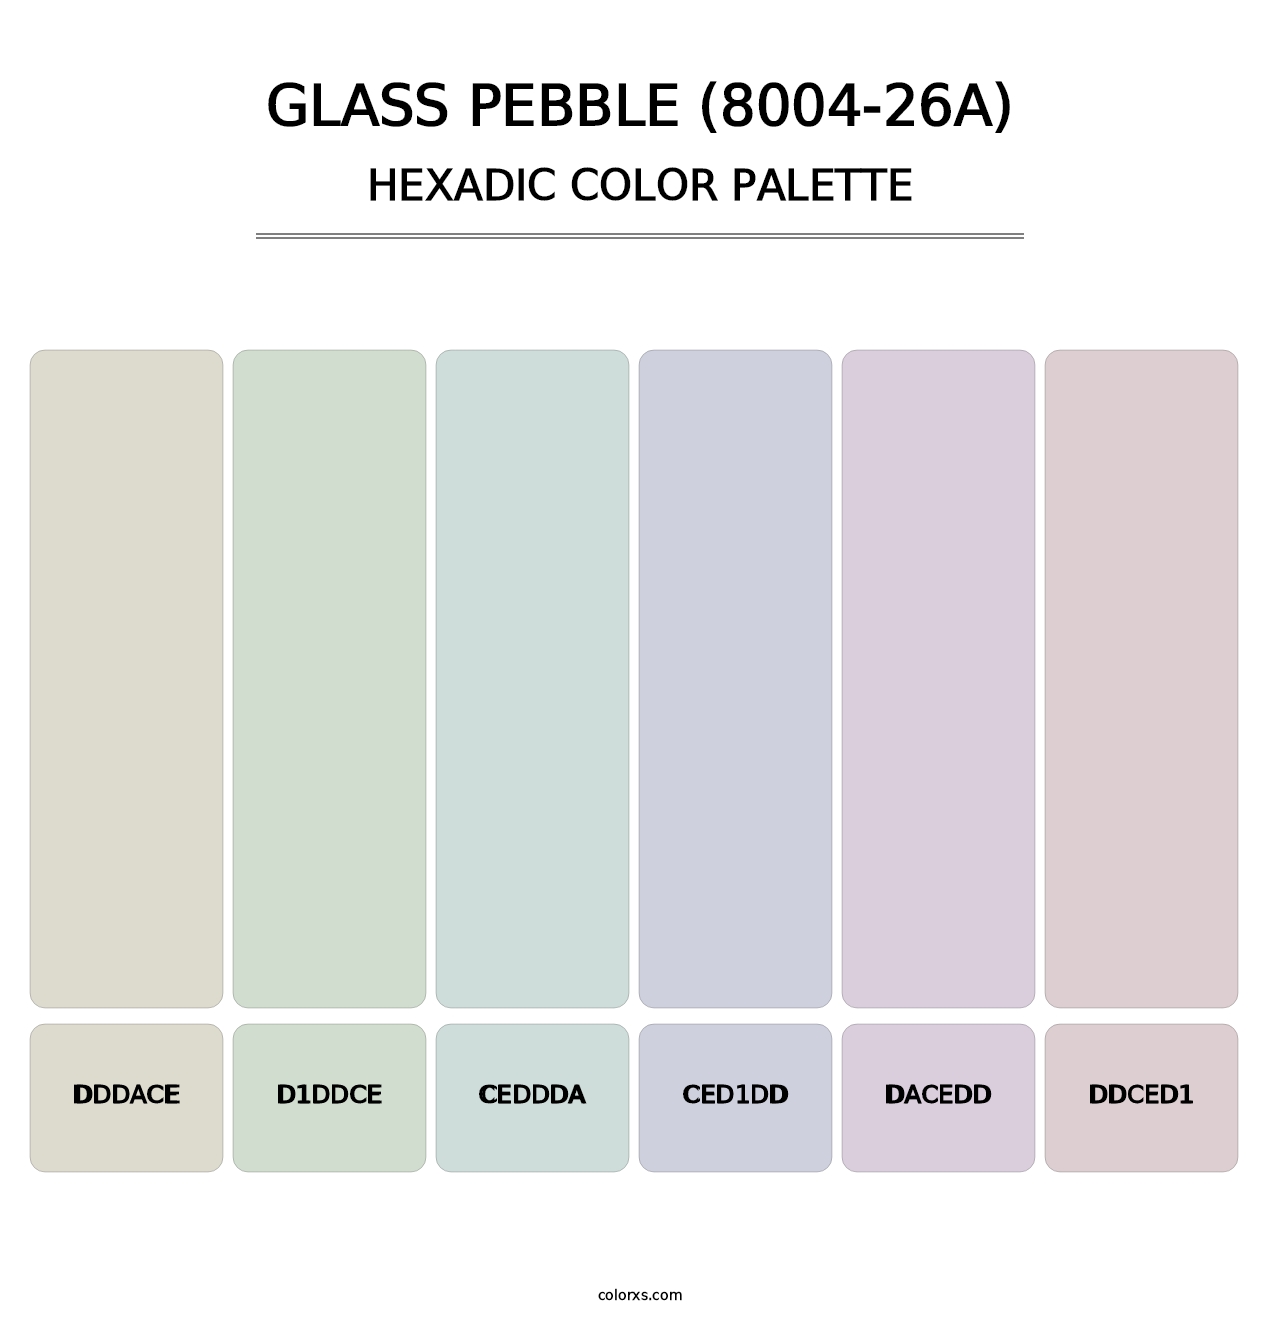 Glass Pebble (8004-26A) - Hexadic Color Palette